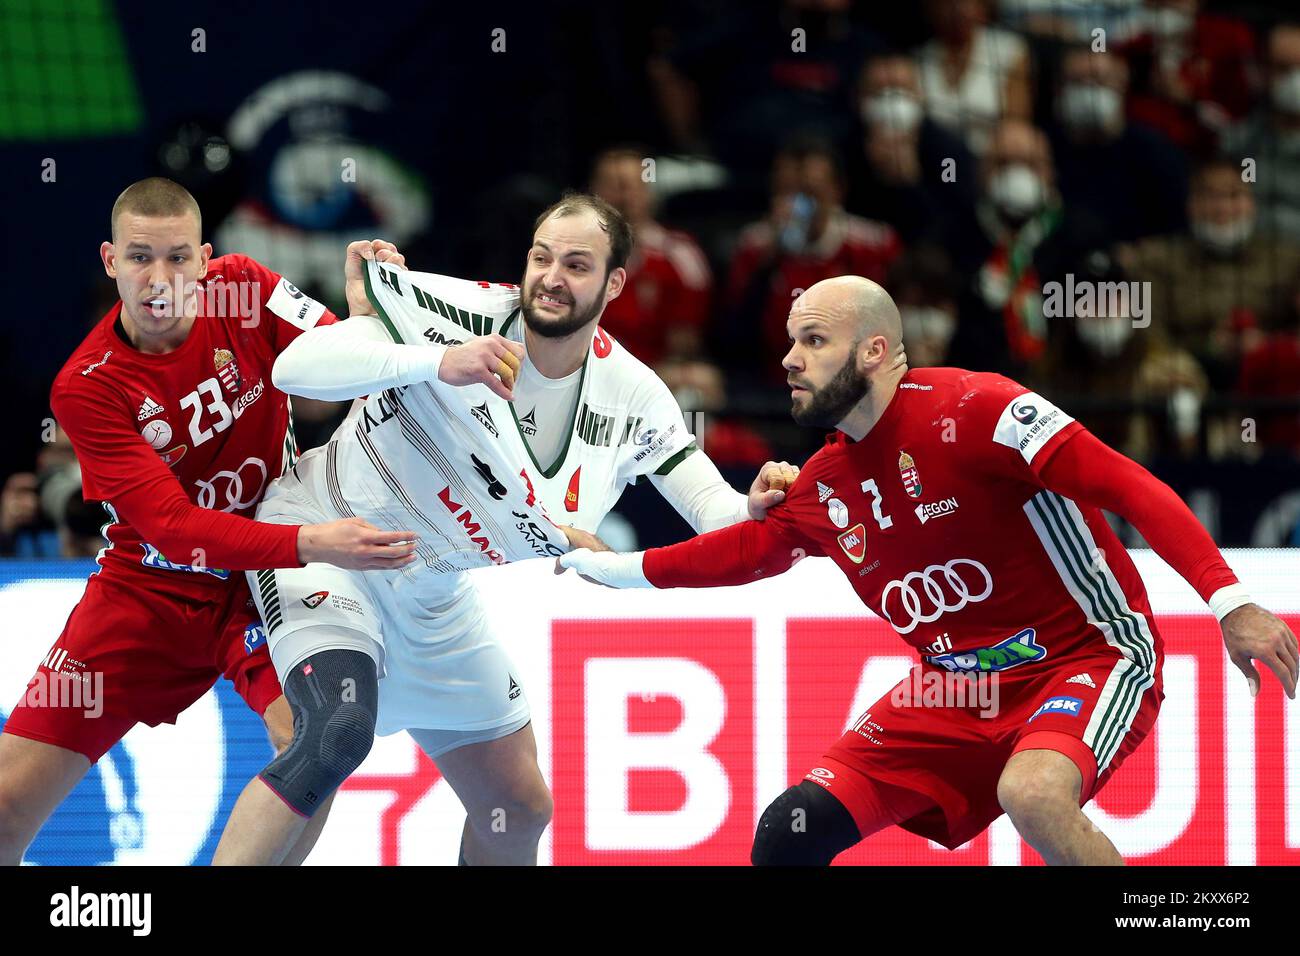 Dominik Máthé signs with Paris Saint-Germain Handball through to